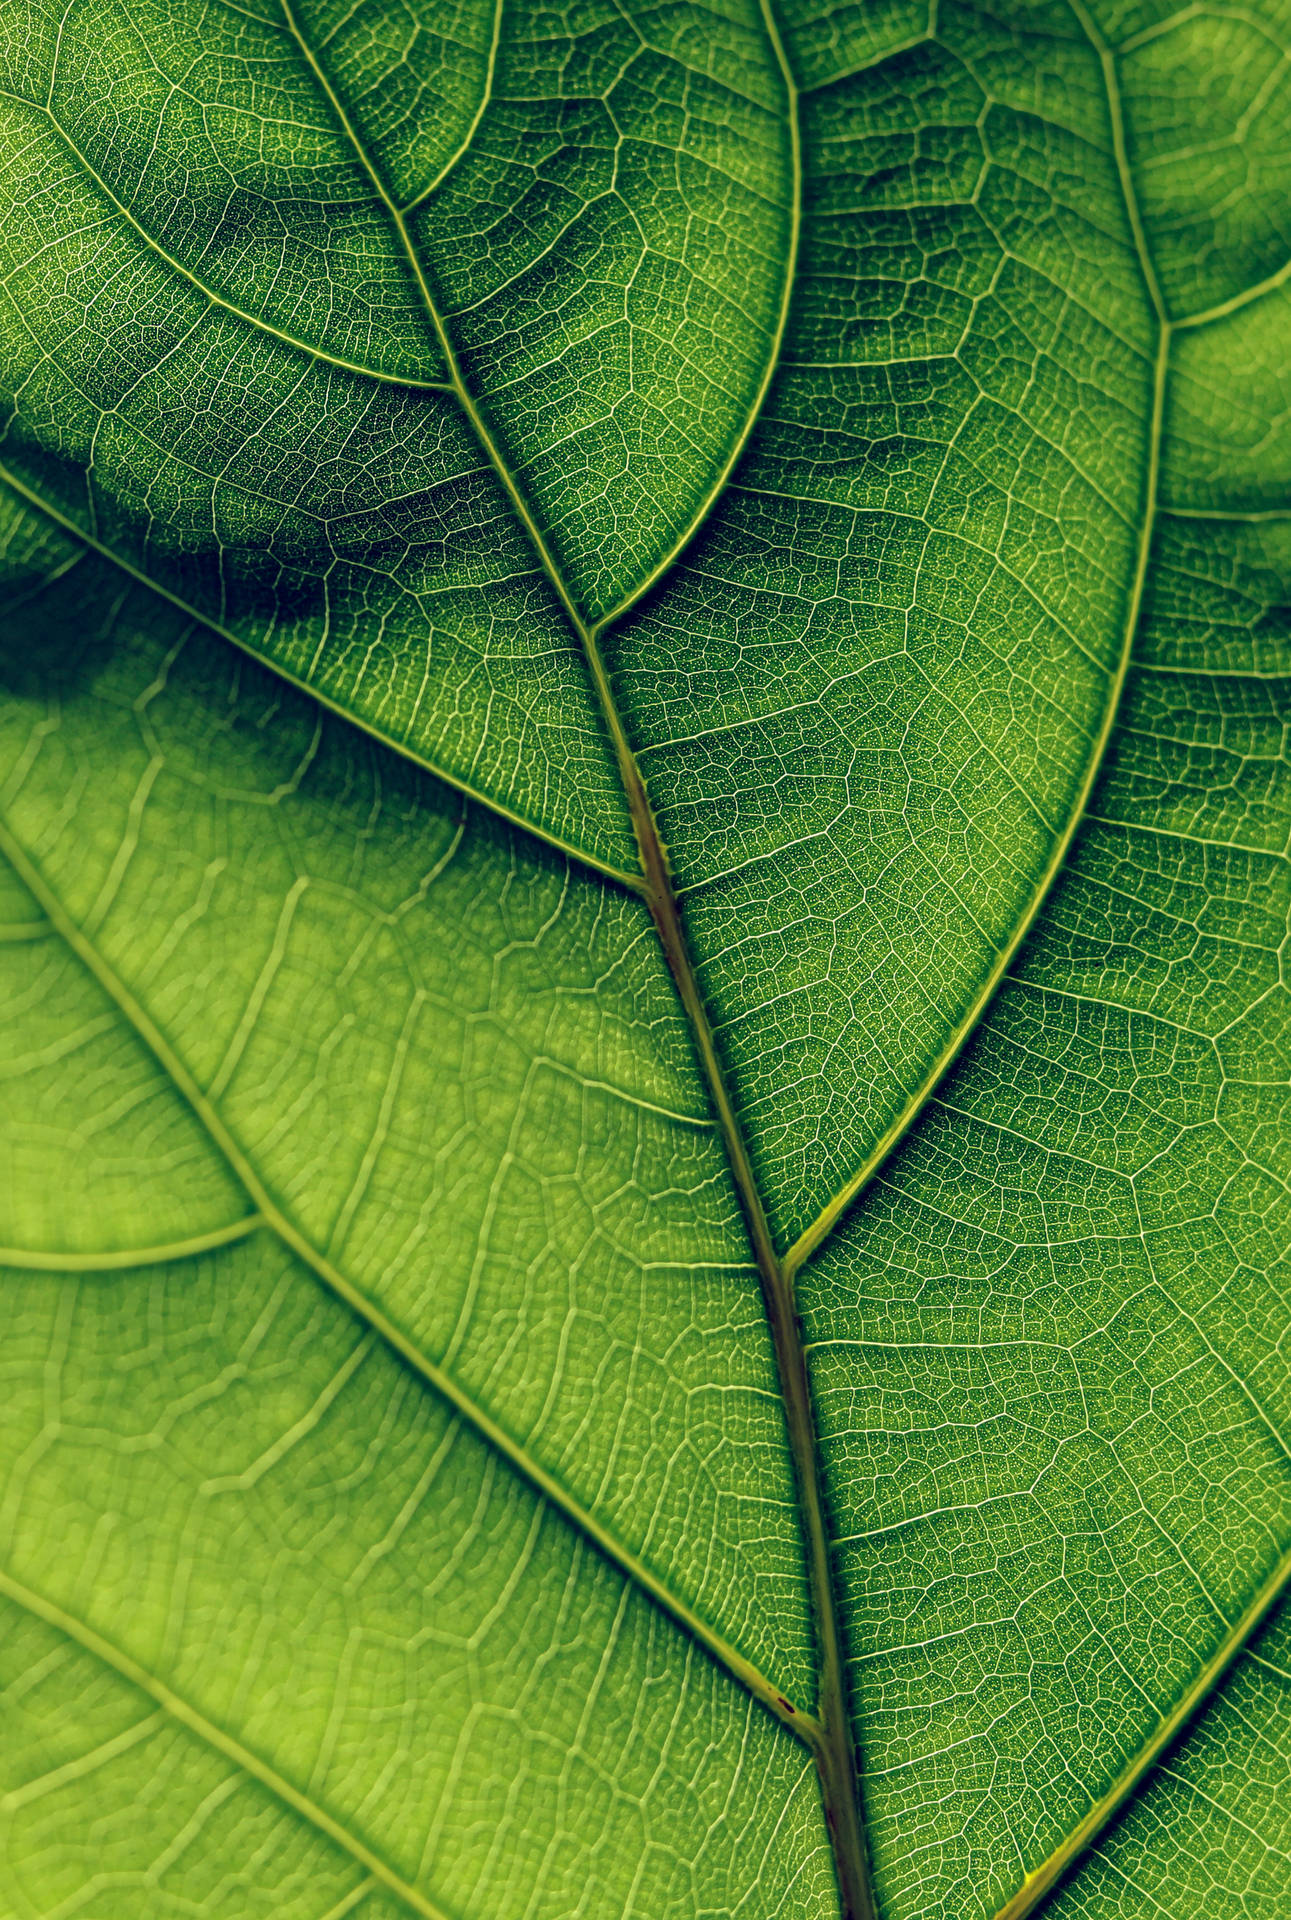 A Close-up Of A Leaf In Lush Green Tones